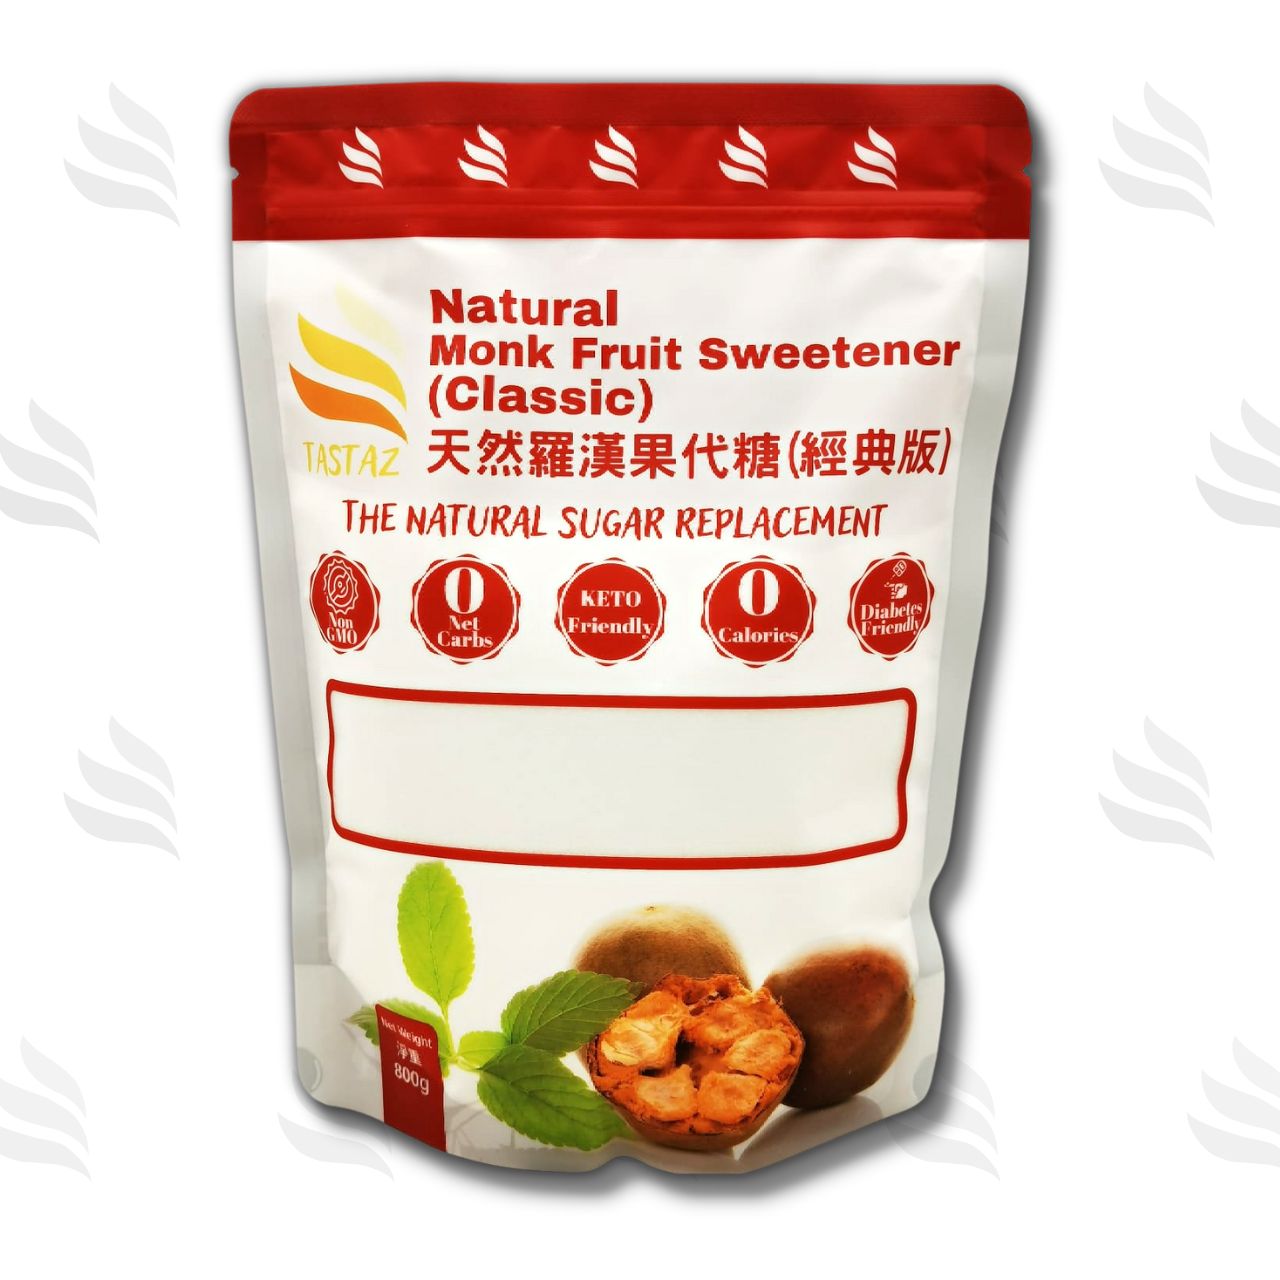 Tastaz Natural Monk Fruit Sweetener(Classic) 天然羅漢果代糖(經典版) 800g